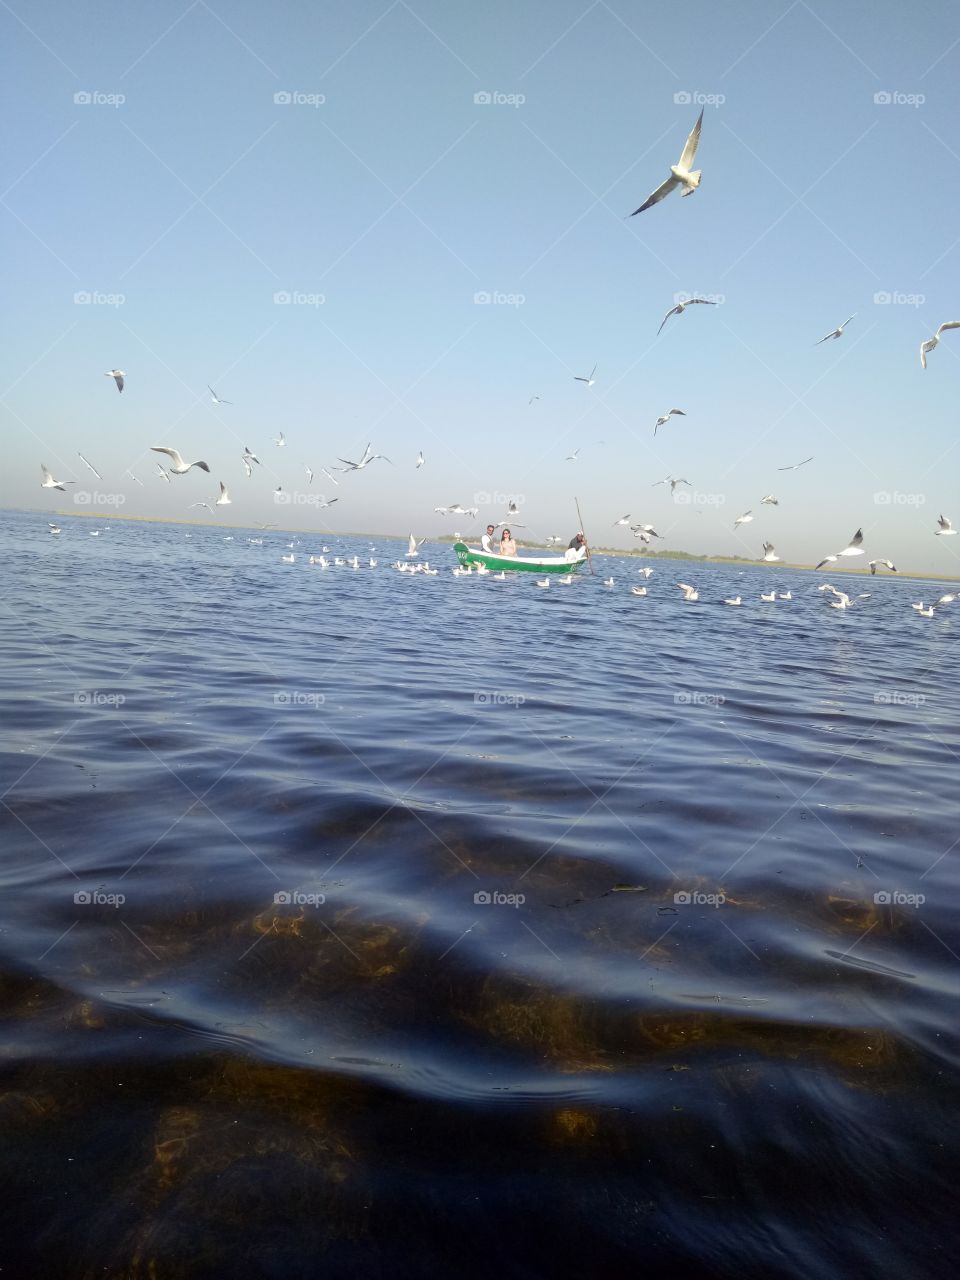 Boting in lake with bird